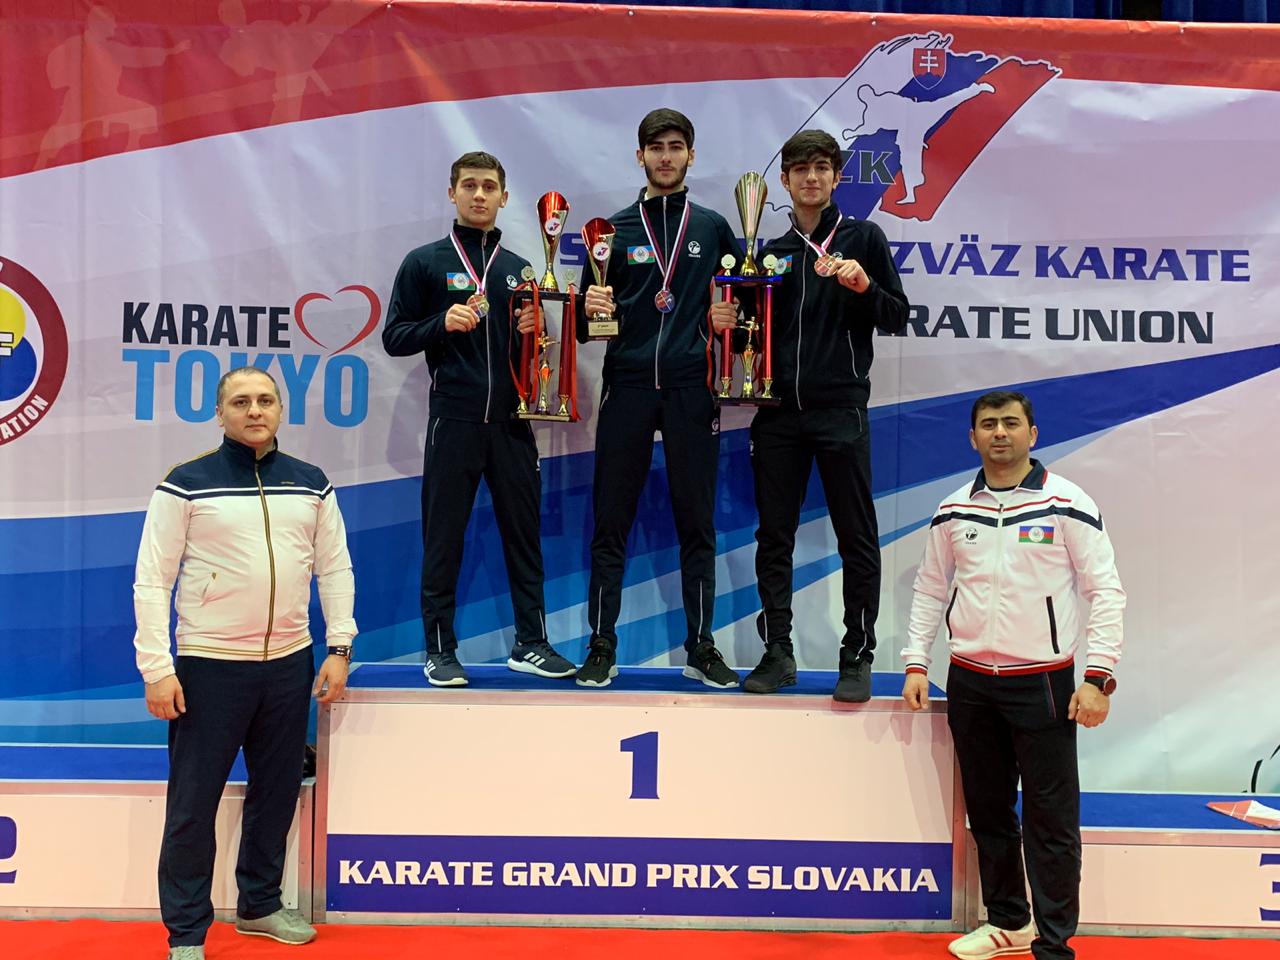 img/posts/slovakiya-qran-prisinde-ugur-qazanan-azerbaycan-karatecileri-2020-02-25-231622/2.jpg